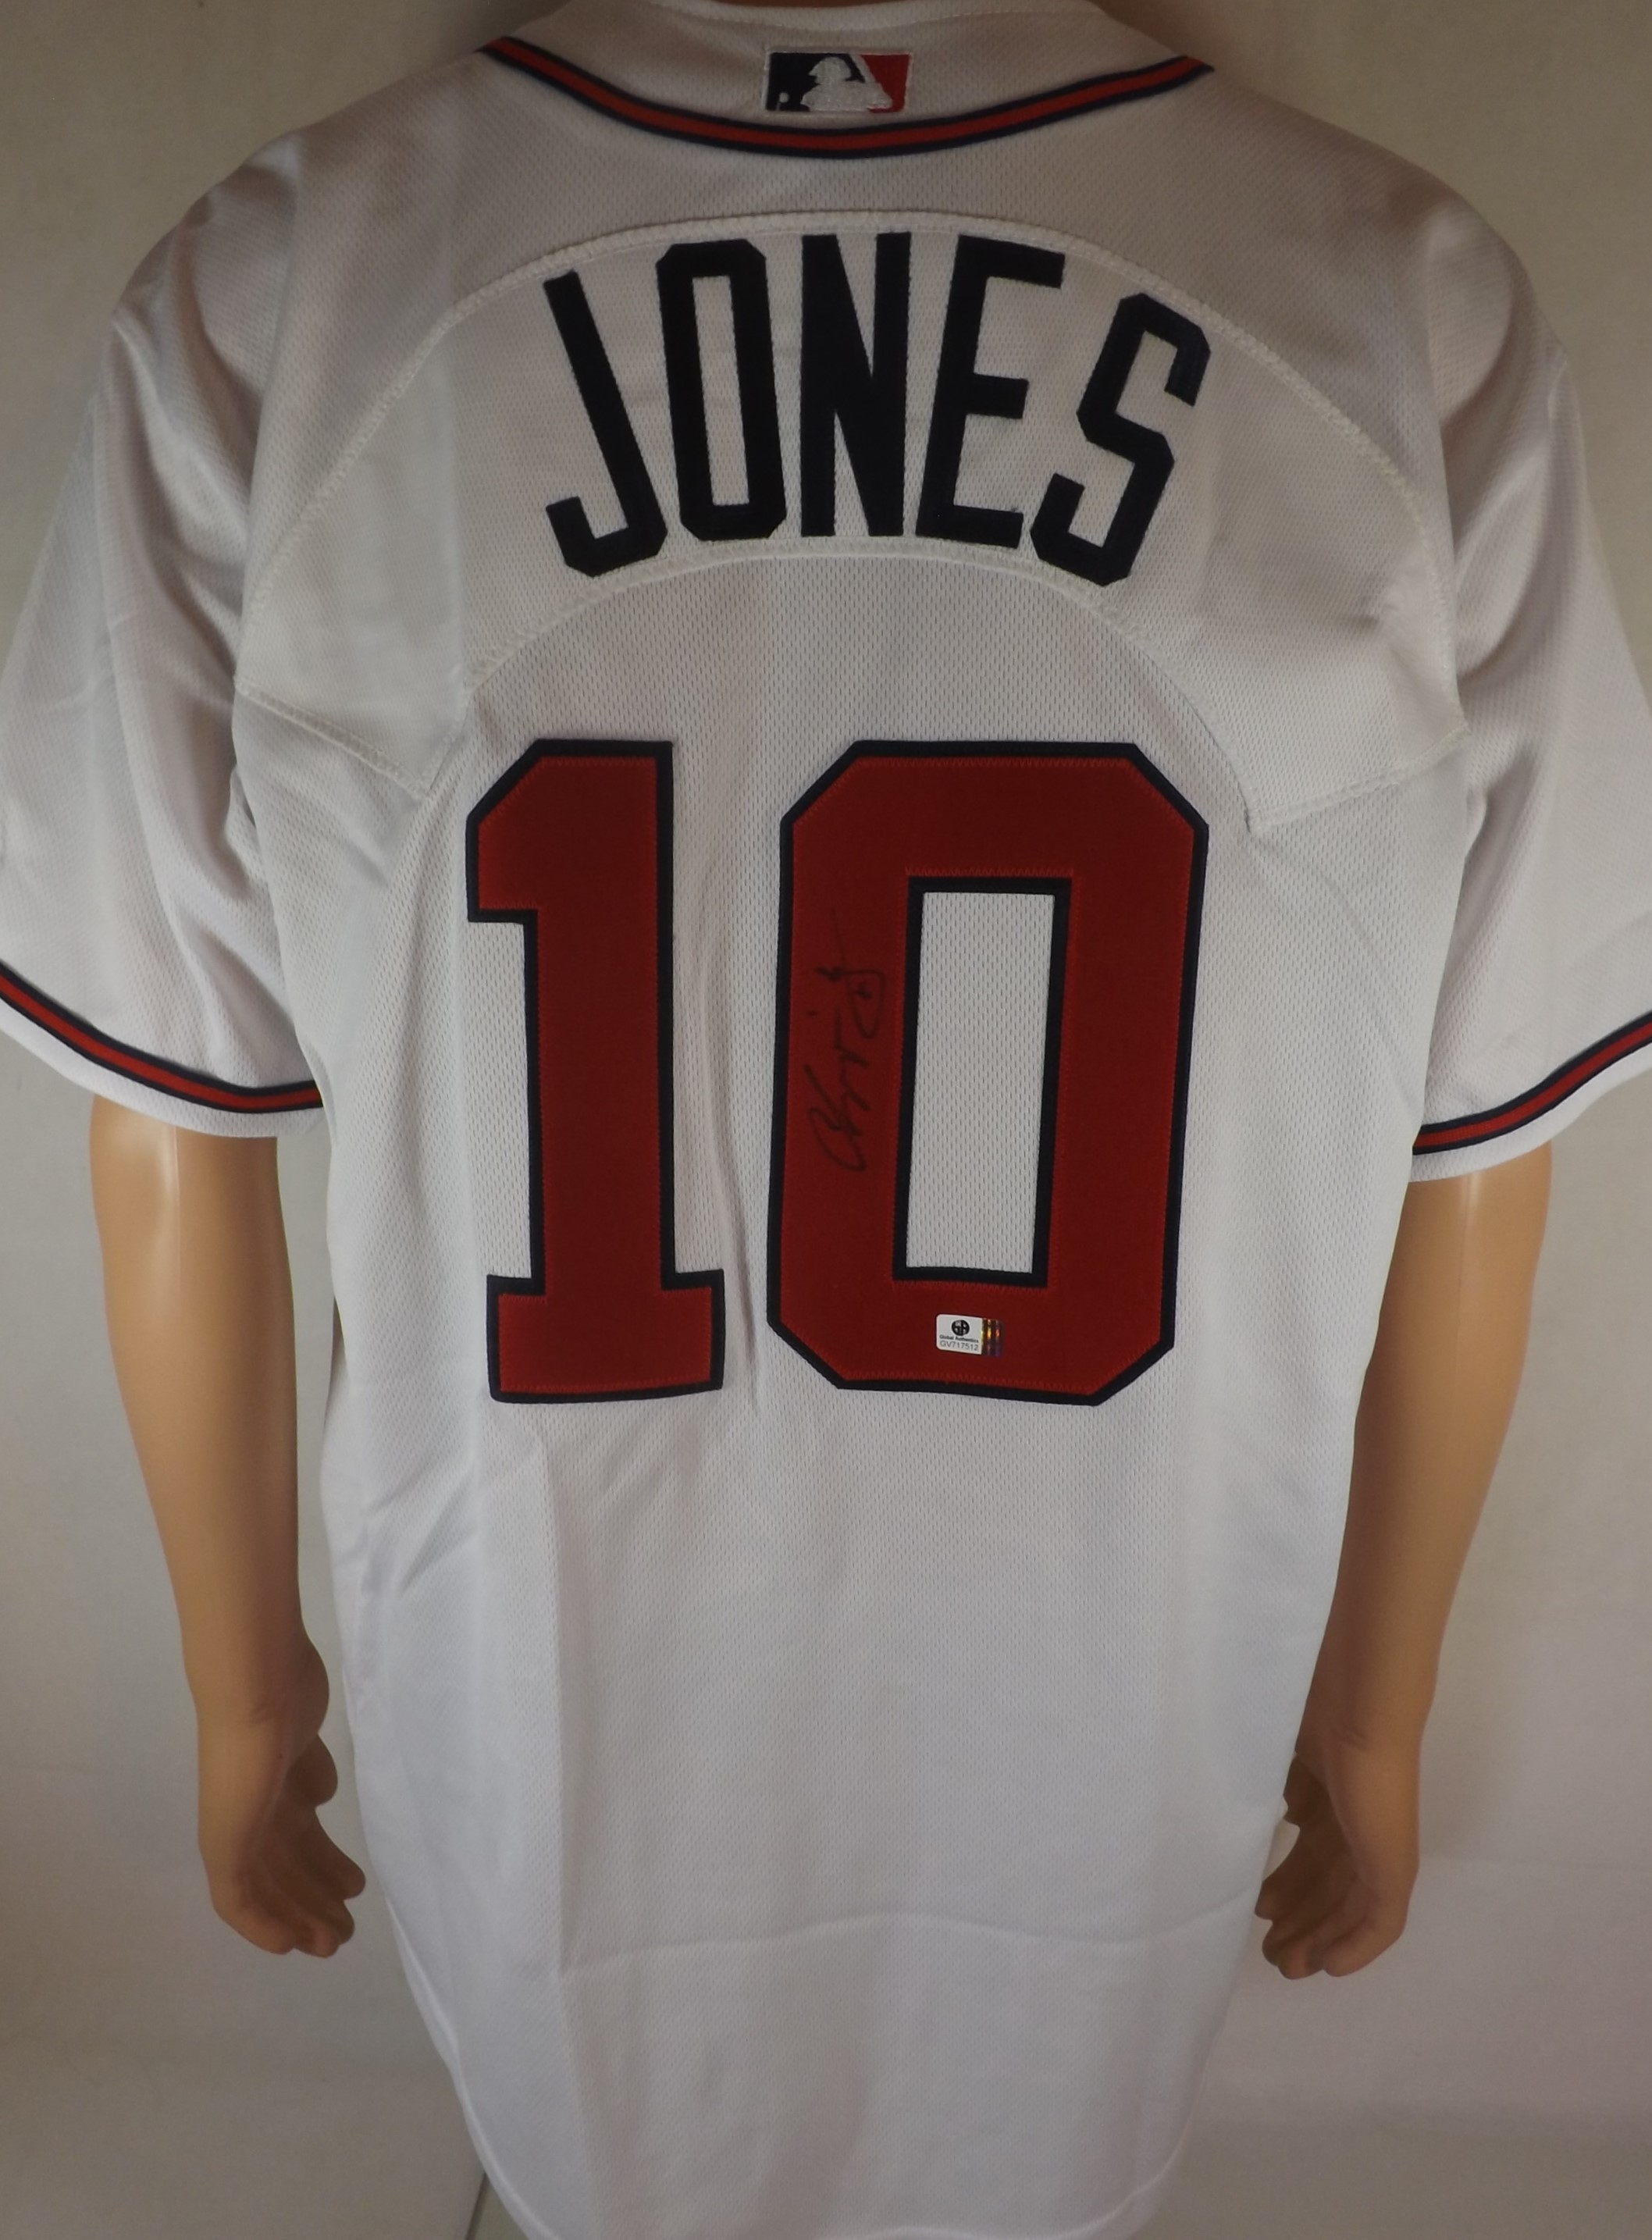 Atlanta Braves Chipper Jones Autographed White Majestic Jersey Size L